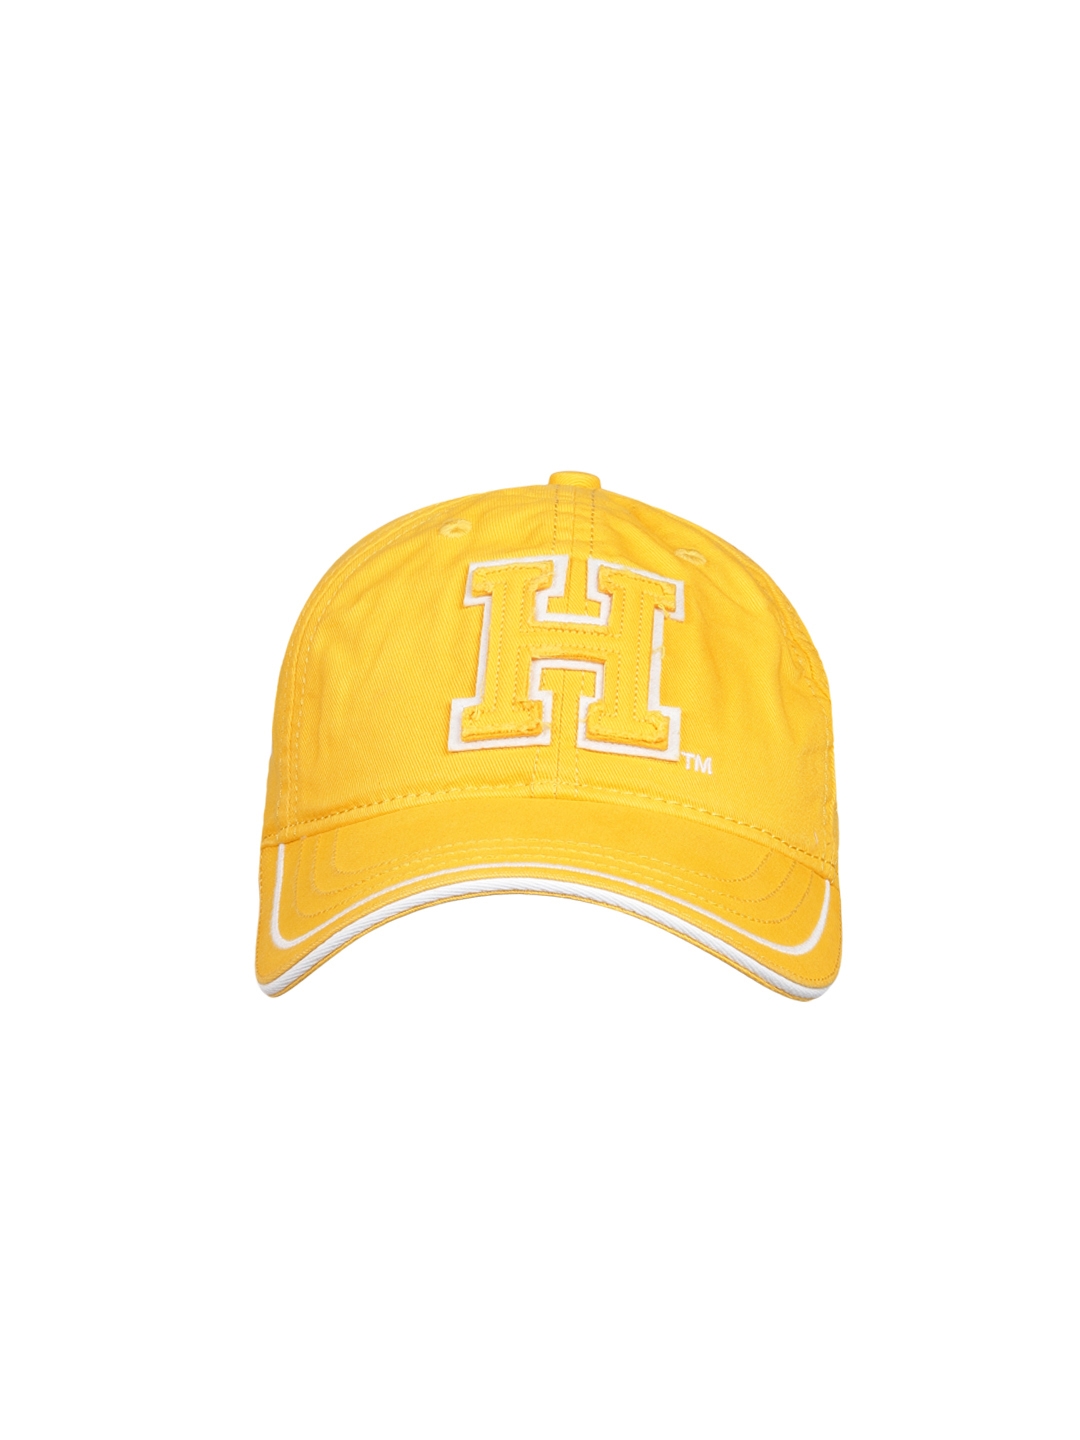 Harvard Unisex Yellow Solid Baseball Cap